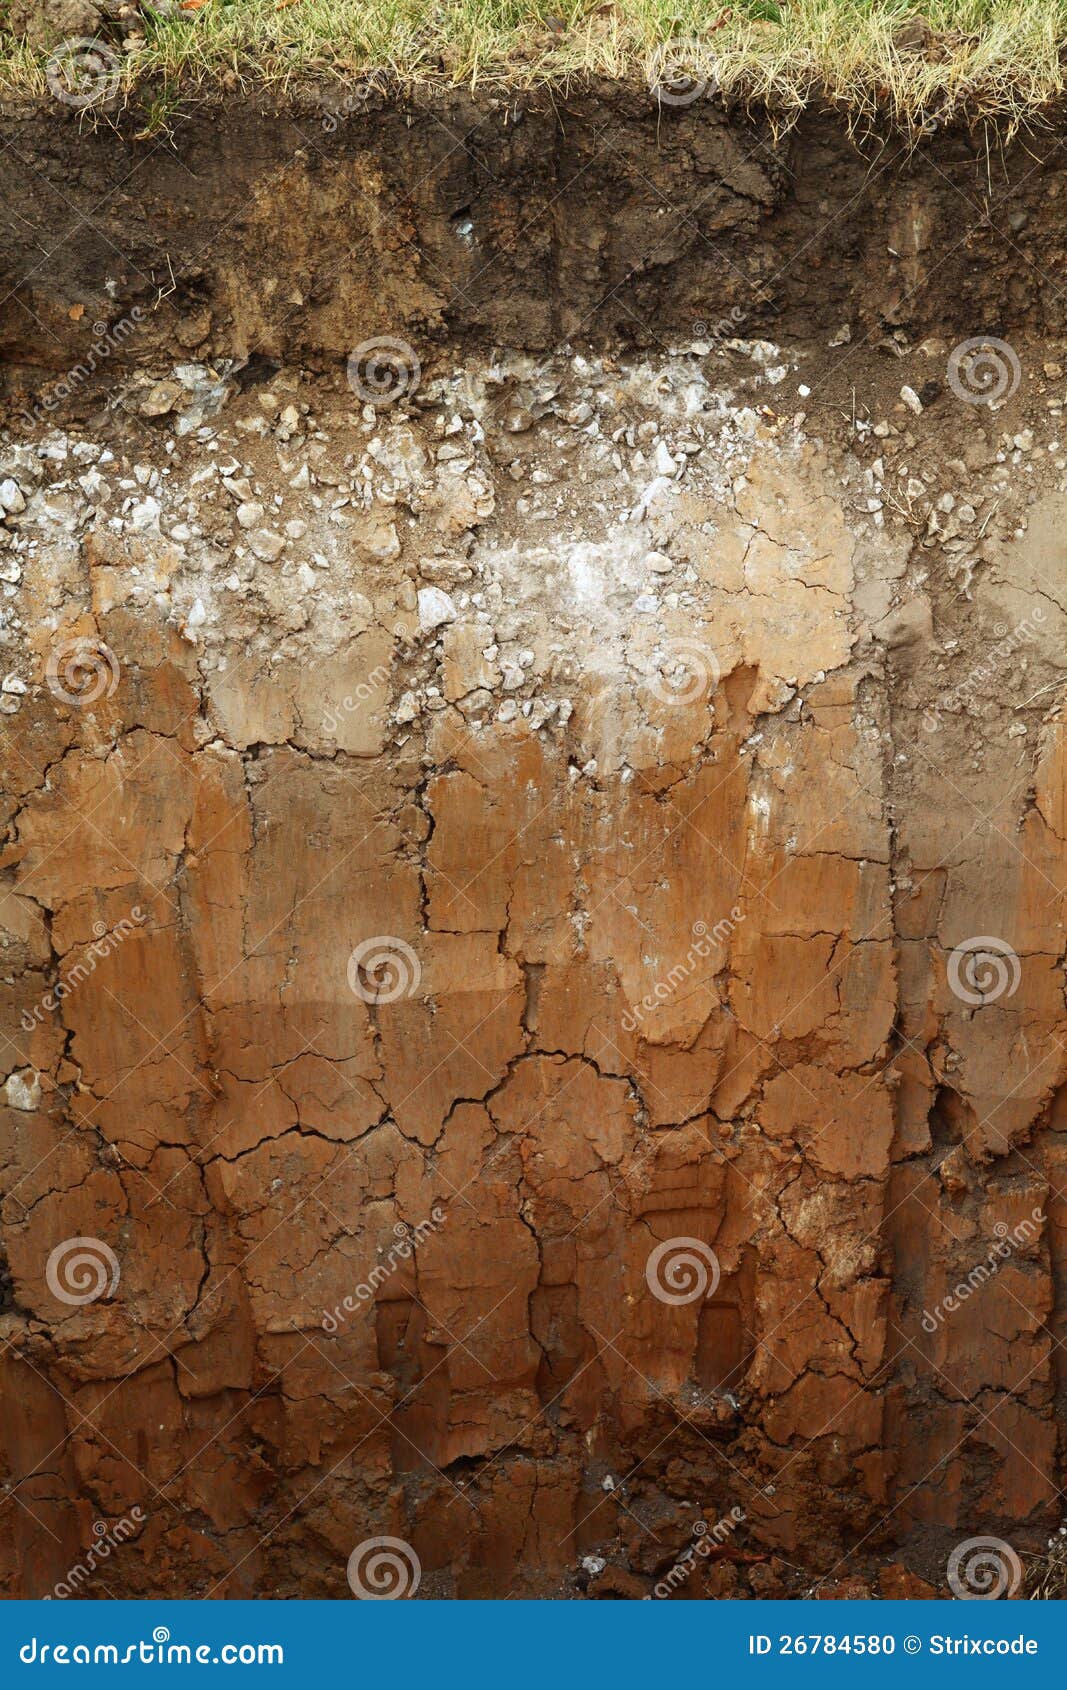 underground soil layers